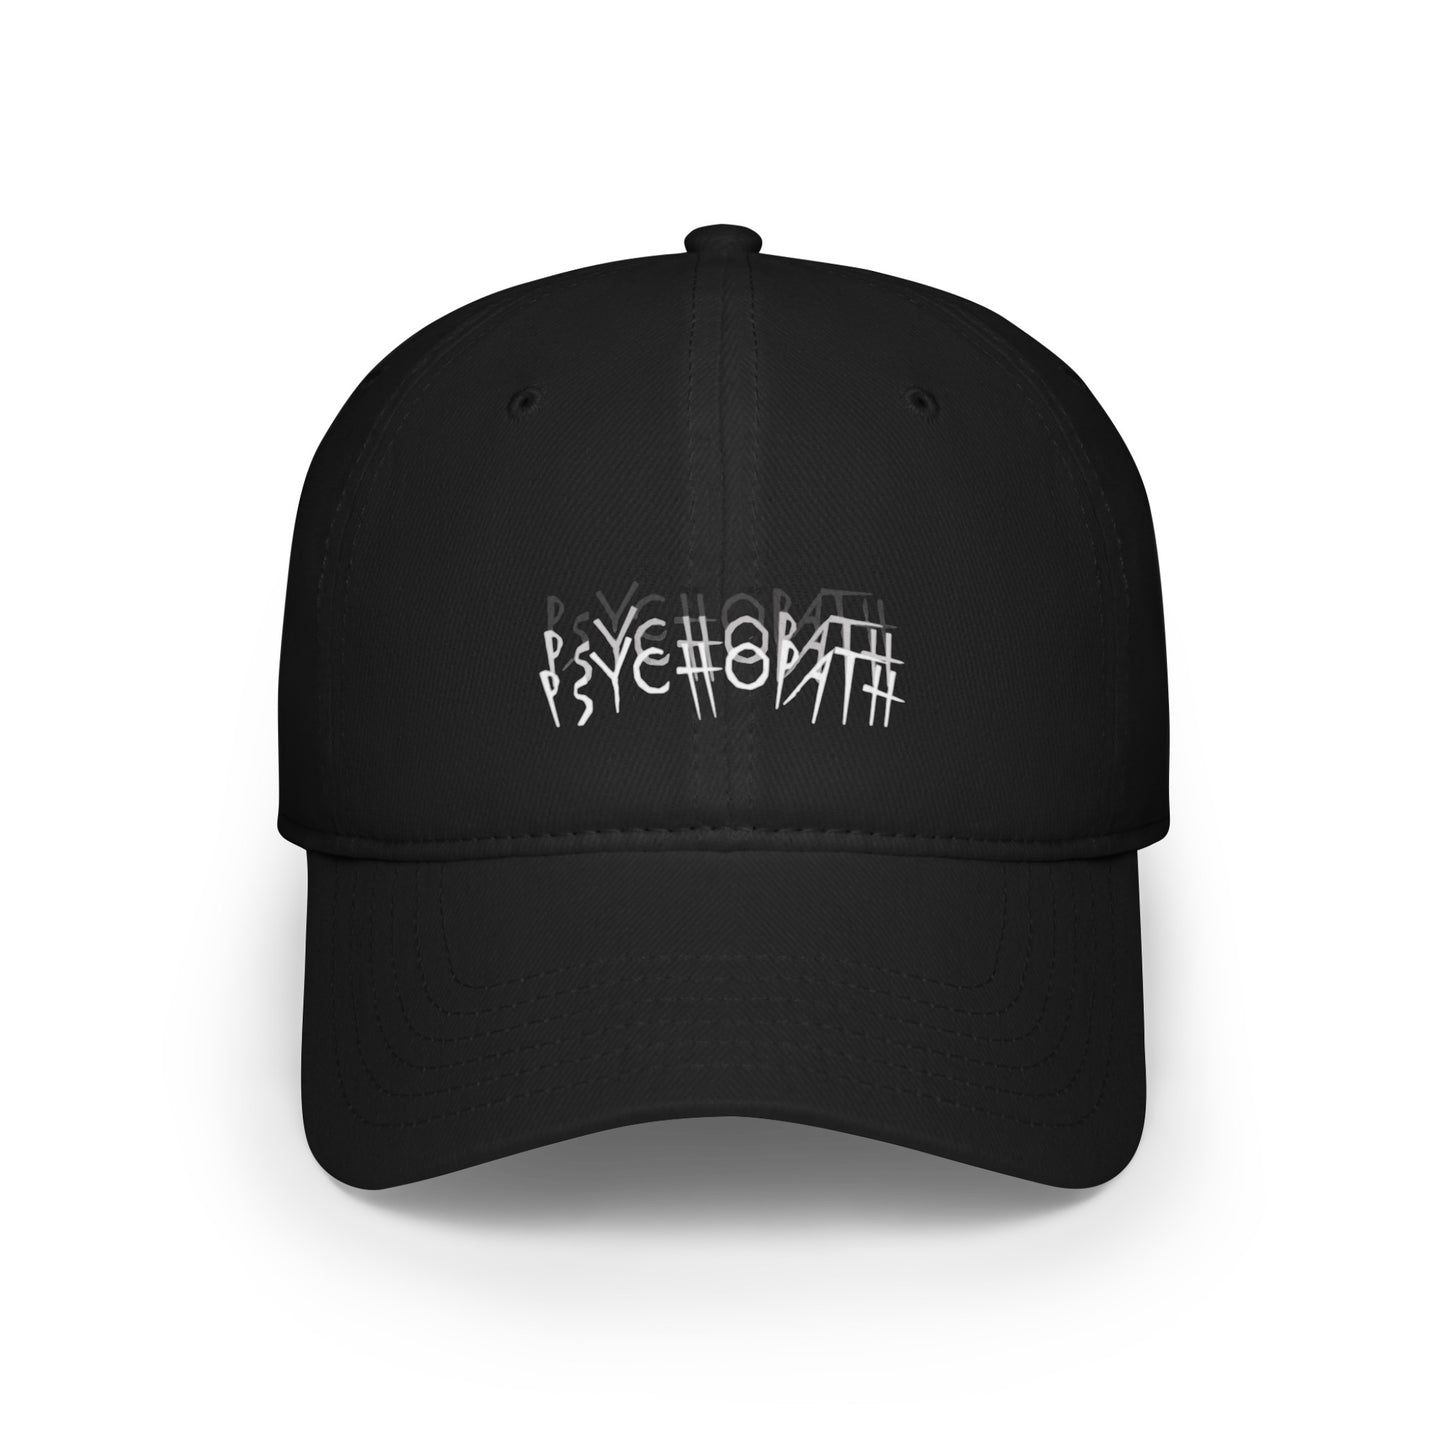 Psychopath Hat